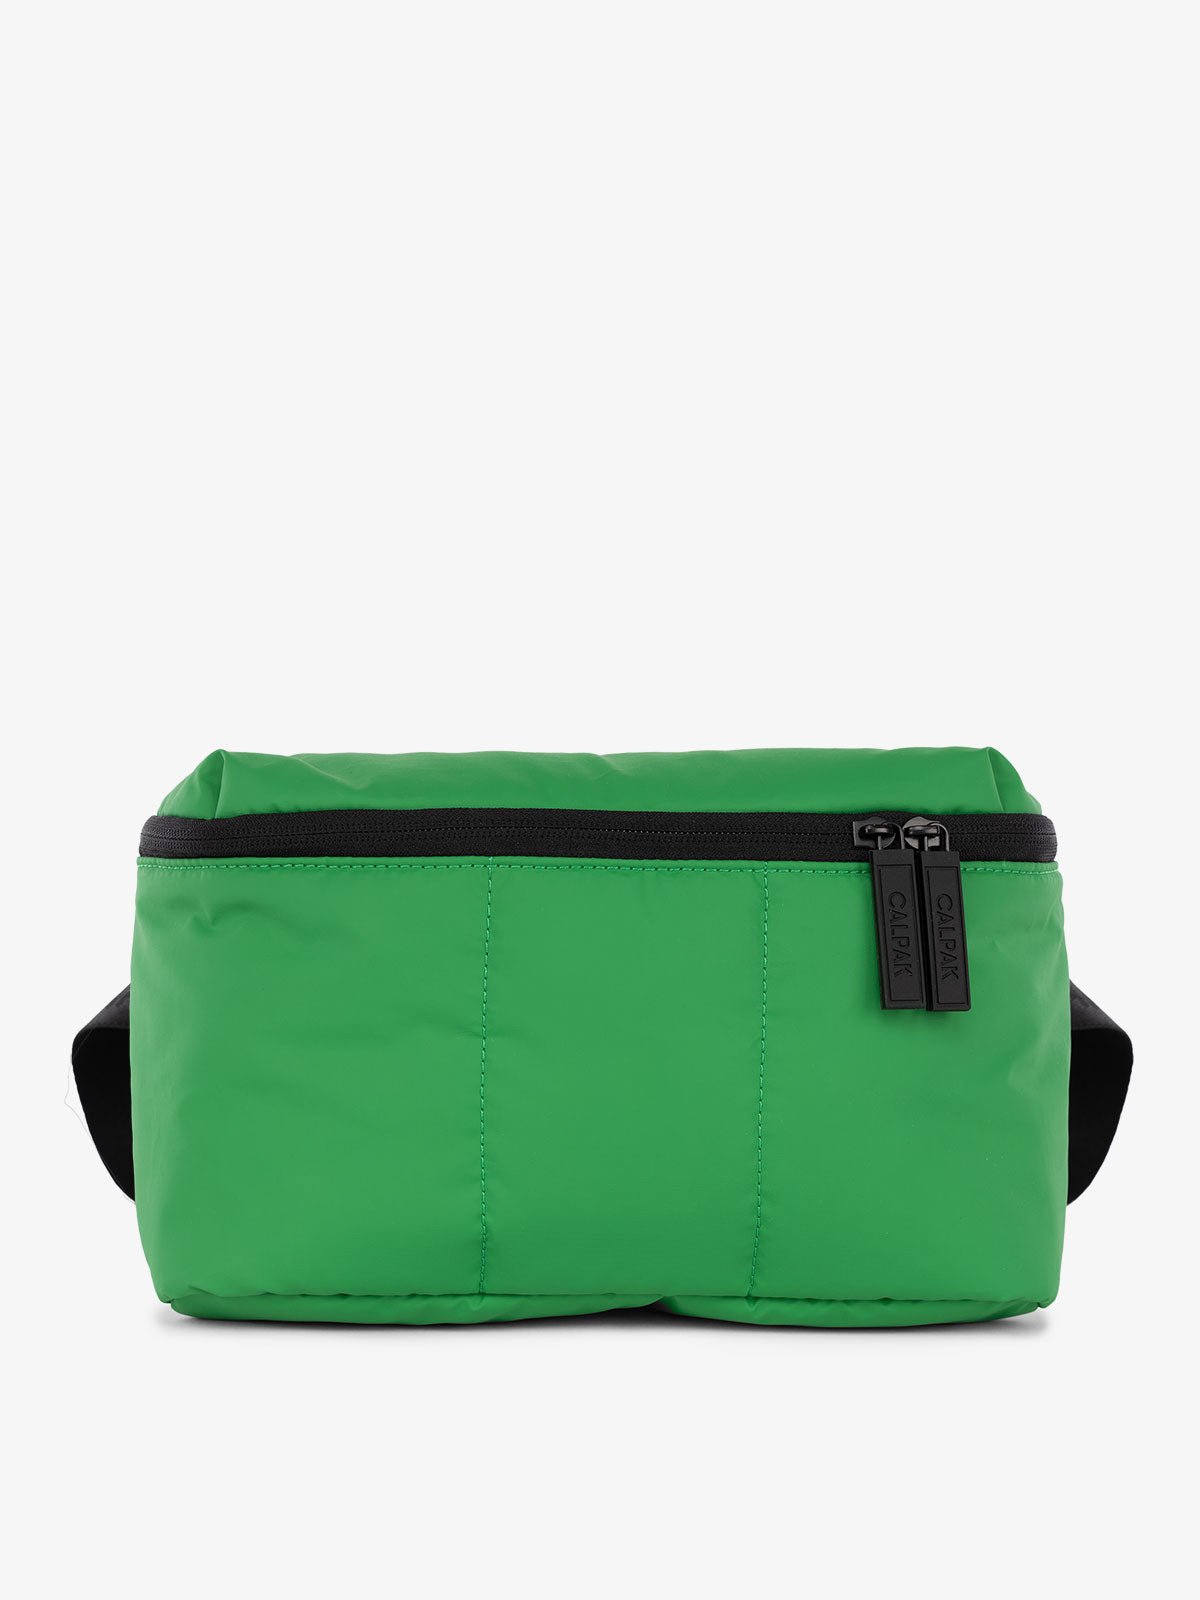 CALPAK Luka Belt Bag with soft puffy exterior in green apple